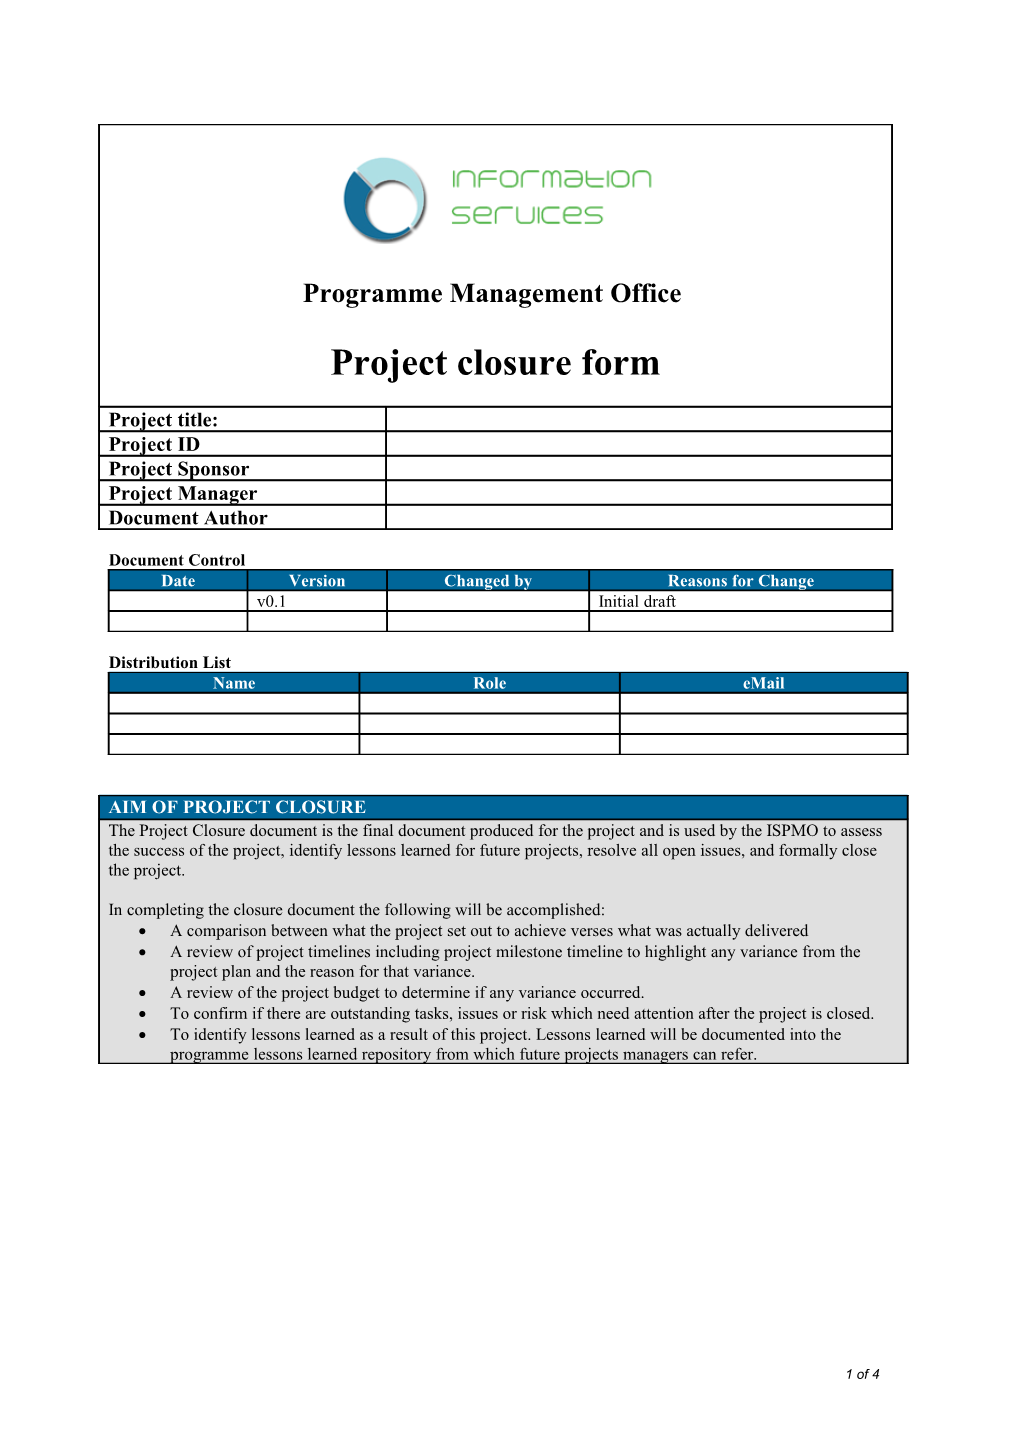 ISPMO Project Closure Form